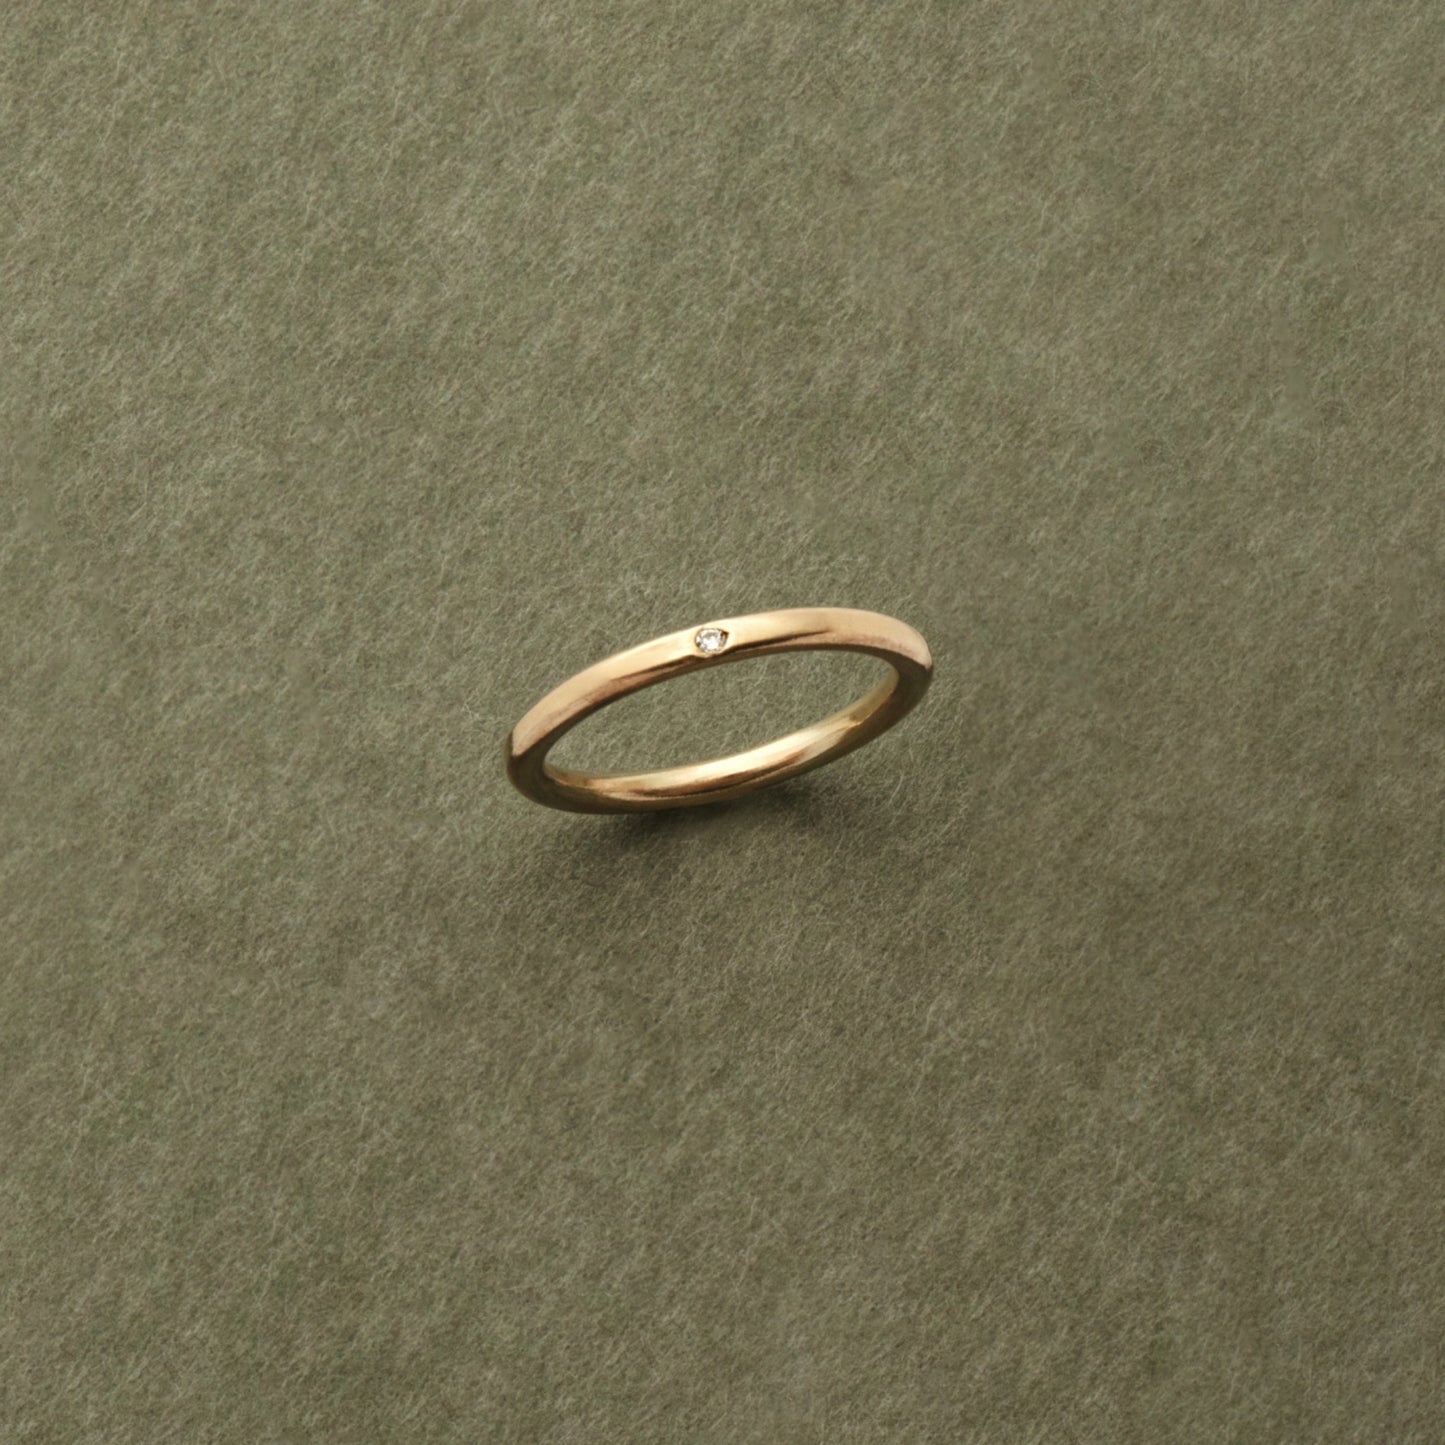 9kt Gold Single Diamond Ring